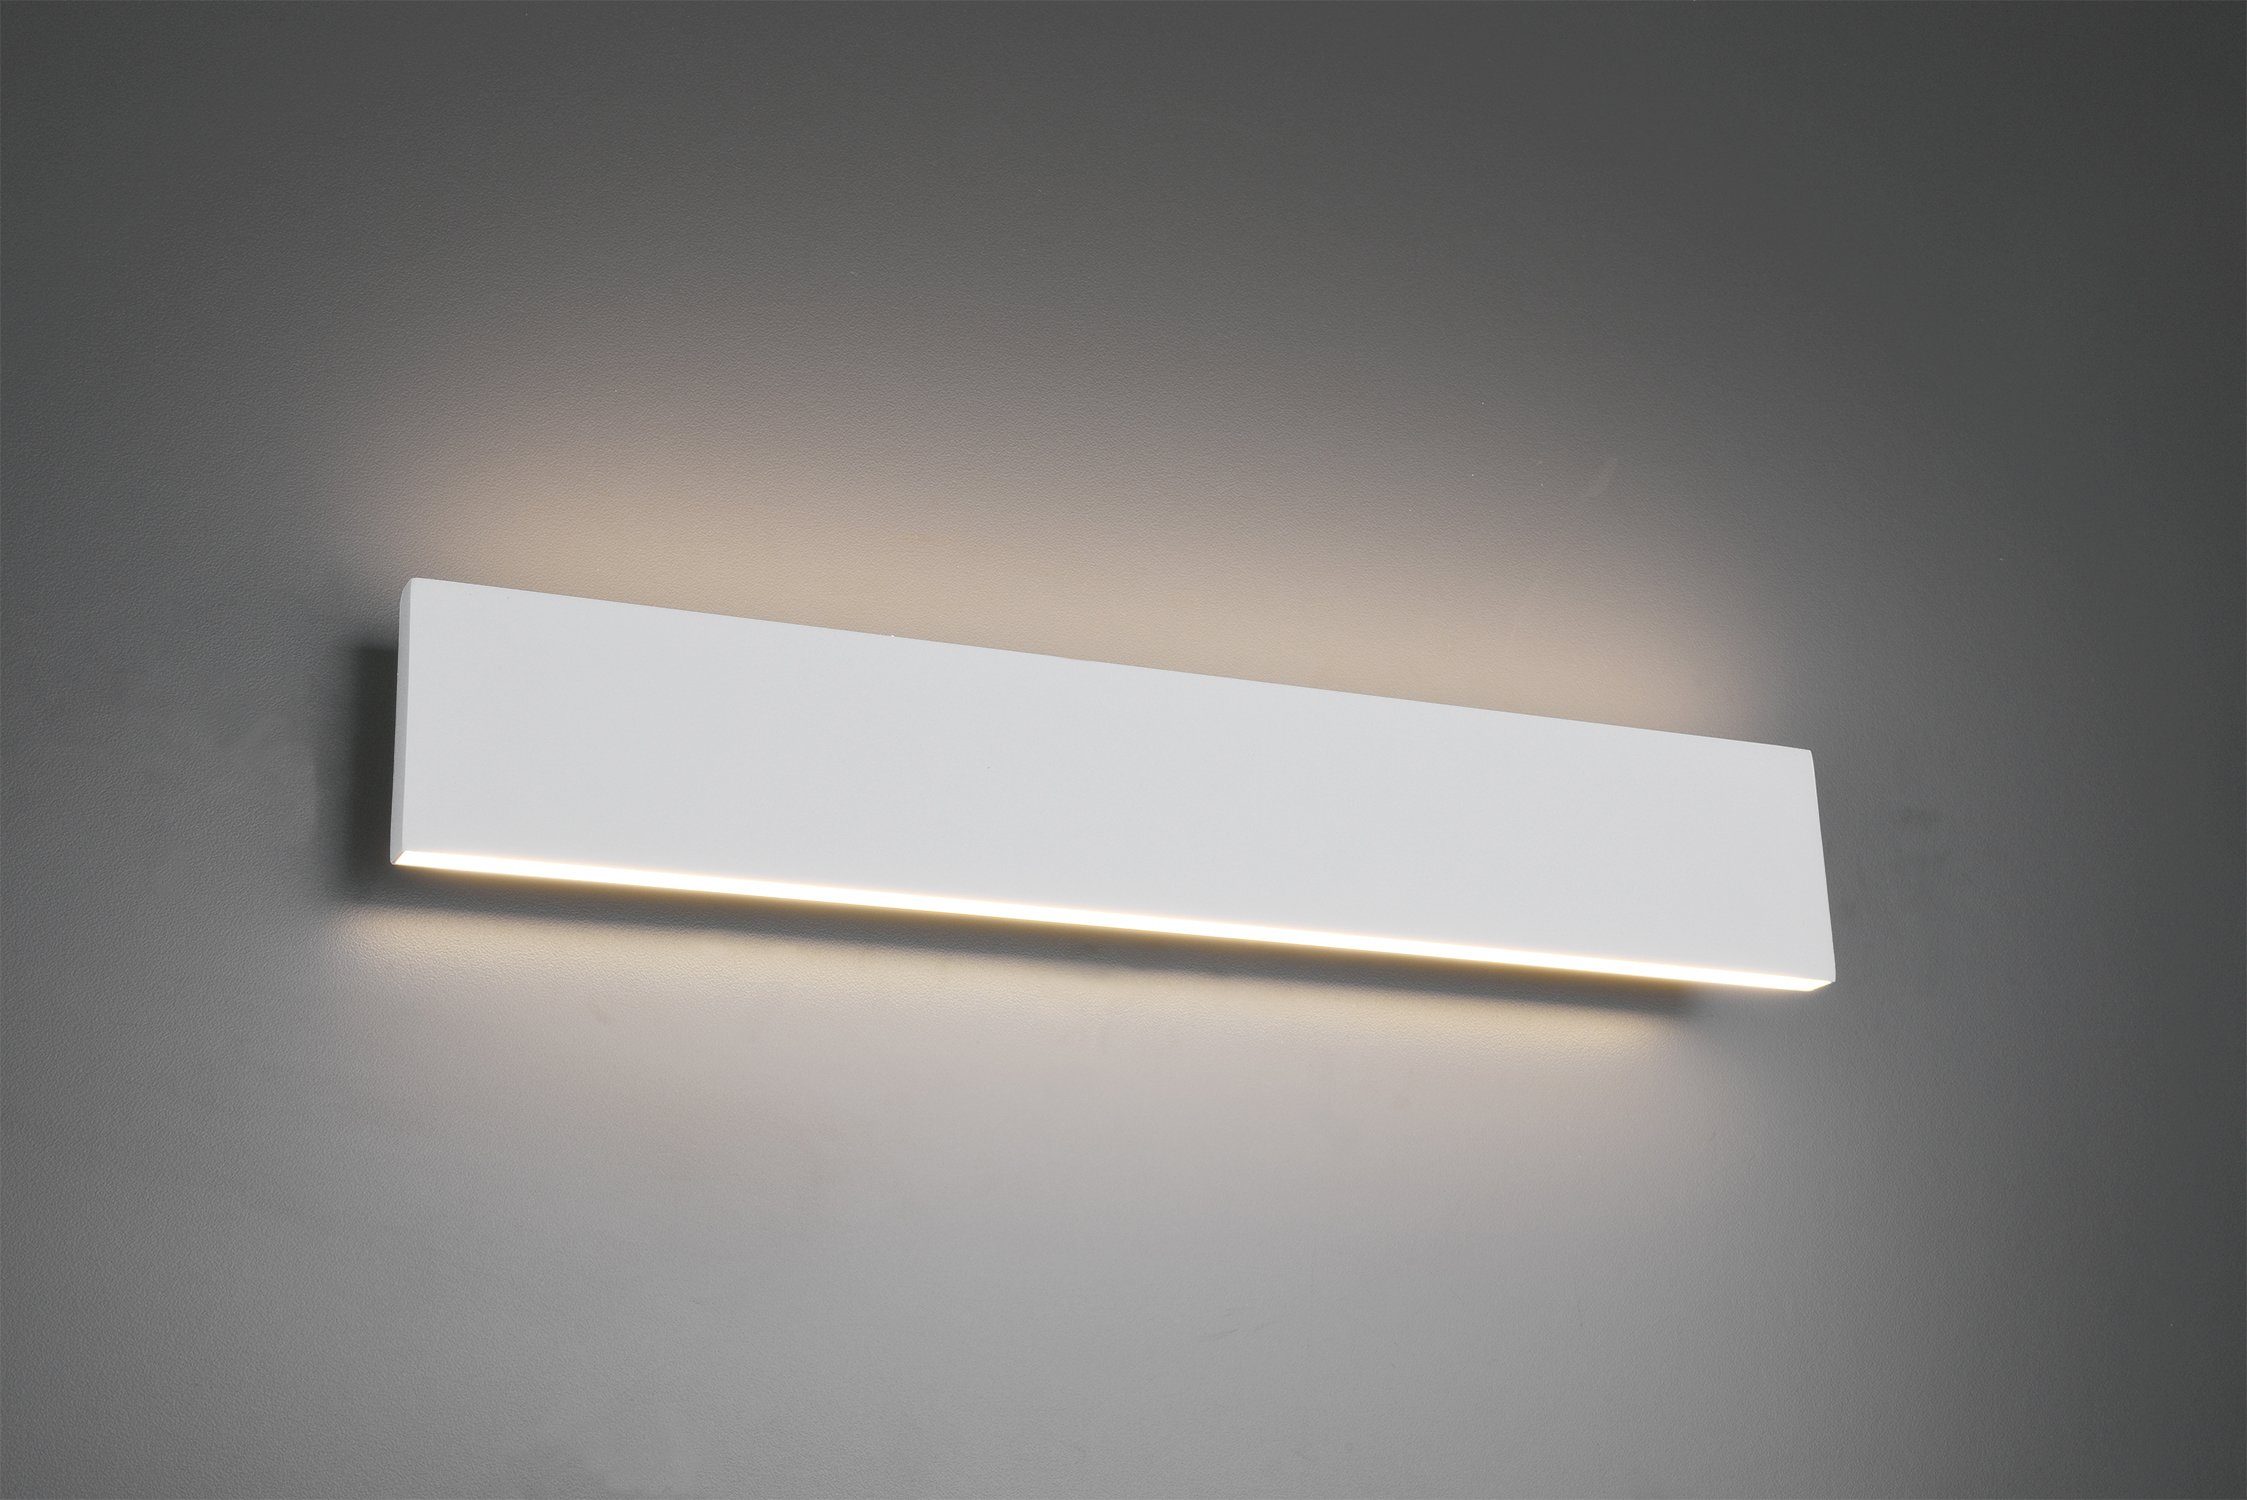 TRIO Leuchten LED Wandleuchte Concha, LED fest integriert, Warmweiß, mit  up-and-down-Beleuchtung, dimmbar über Wandschalter, 2x 1000 Lumen, bequem  über den Wandschalter in 3 Stufen dimmbar (Switch Dimmer)